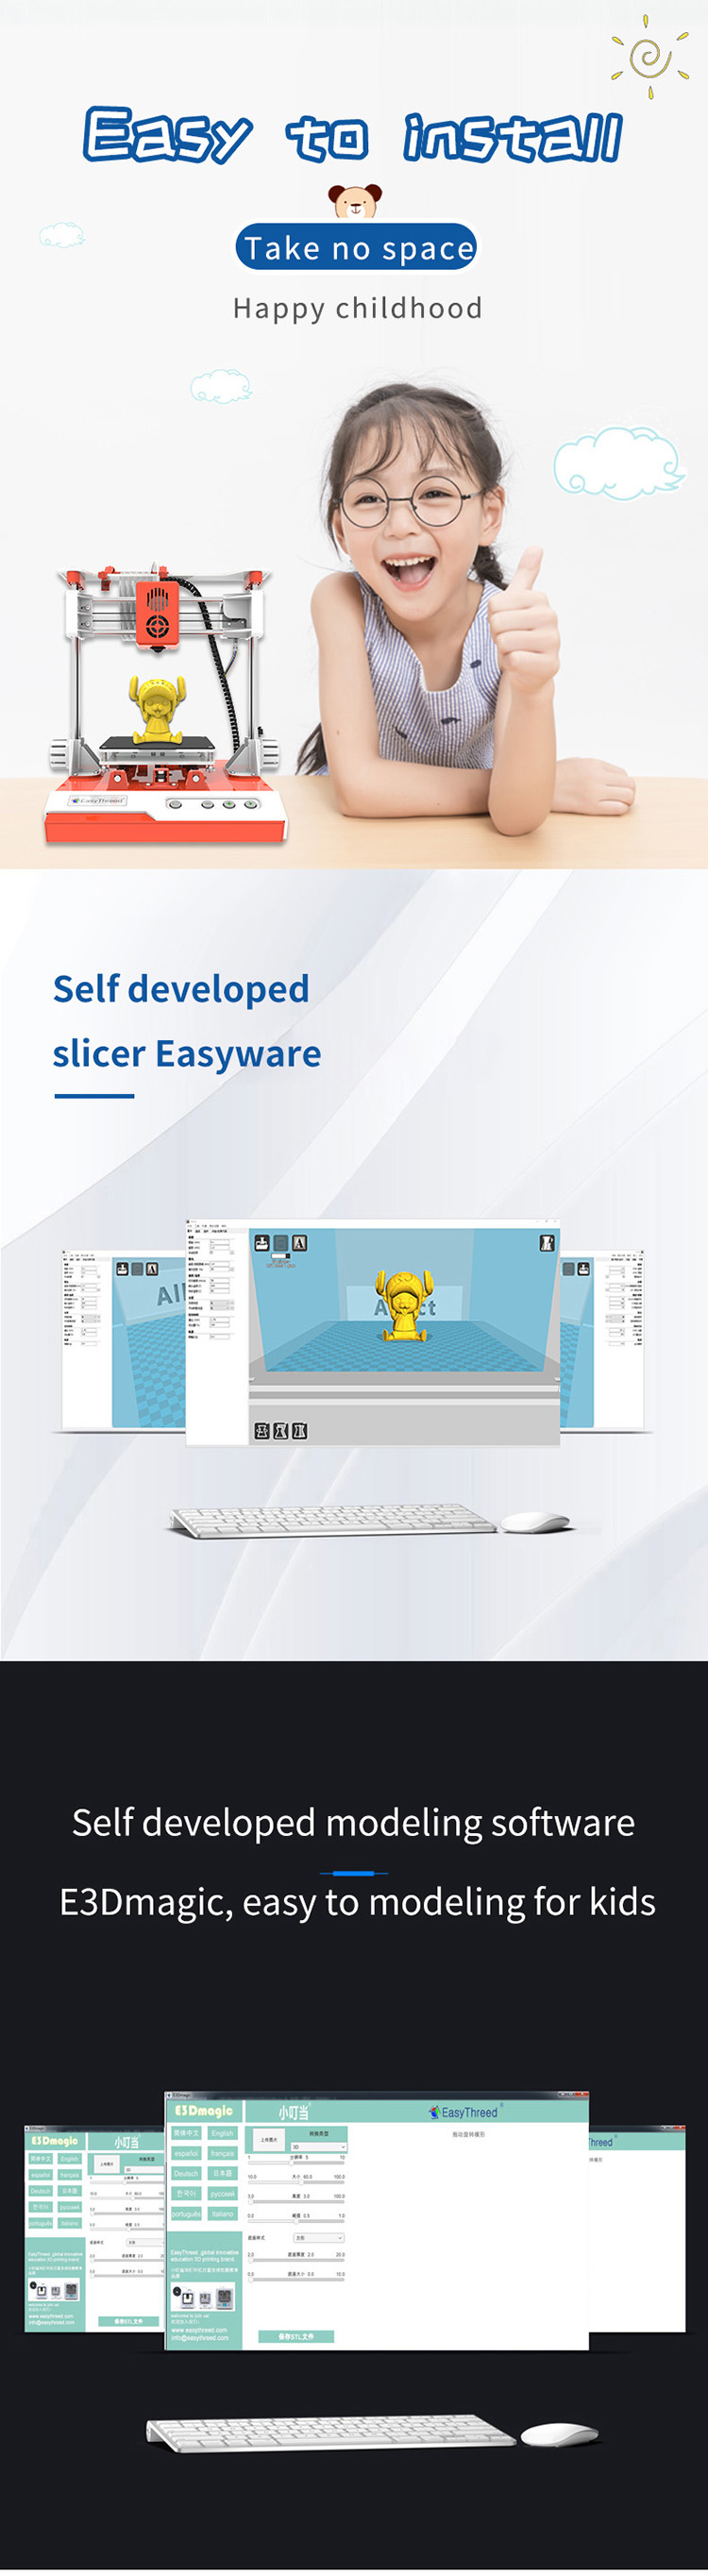 Easythreedreg-K1-Desktop-Mini-3D-Printer-Kit-100X100X100mm-Print-Size-Four-Keys-Control-for-Househol-1750973-6